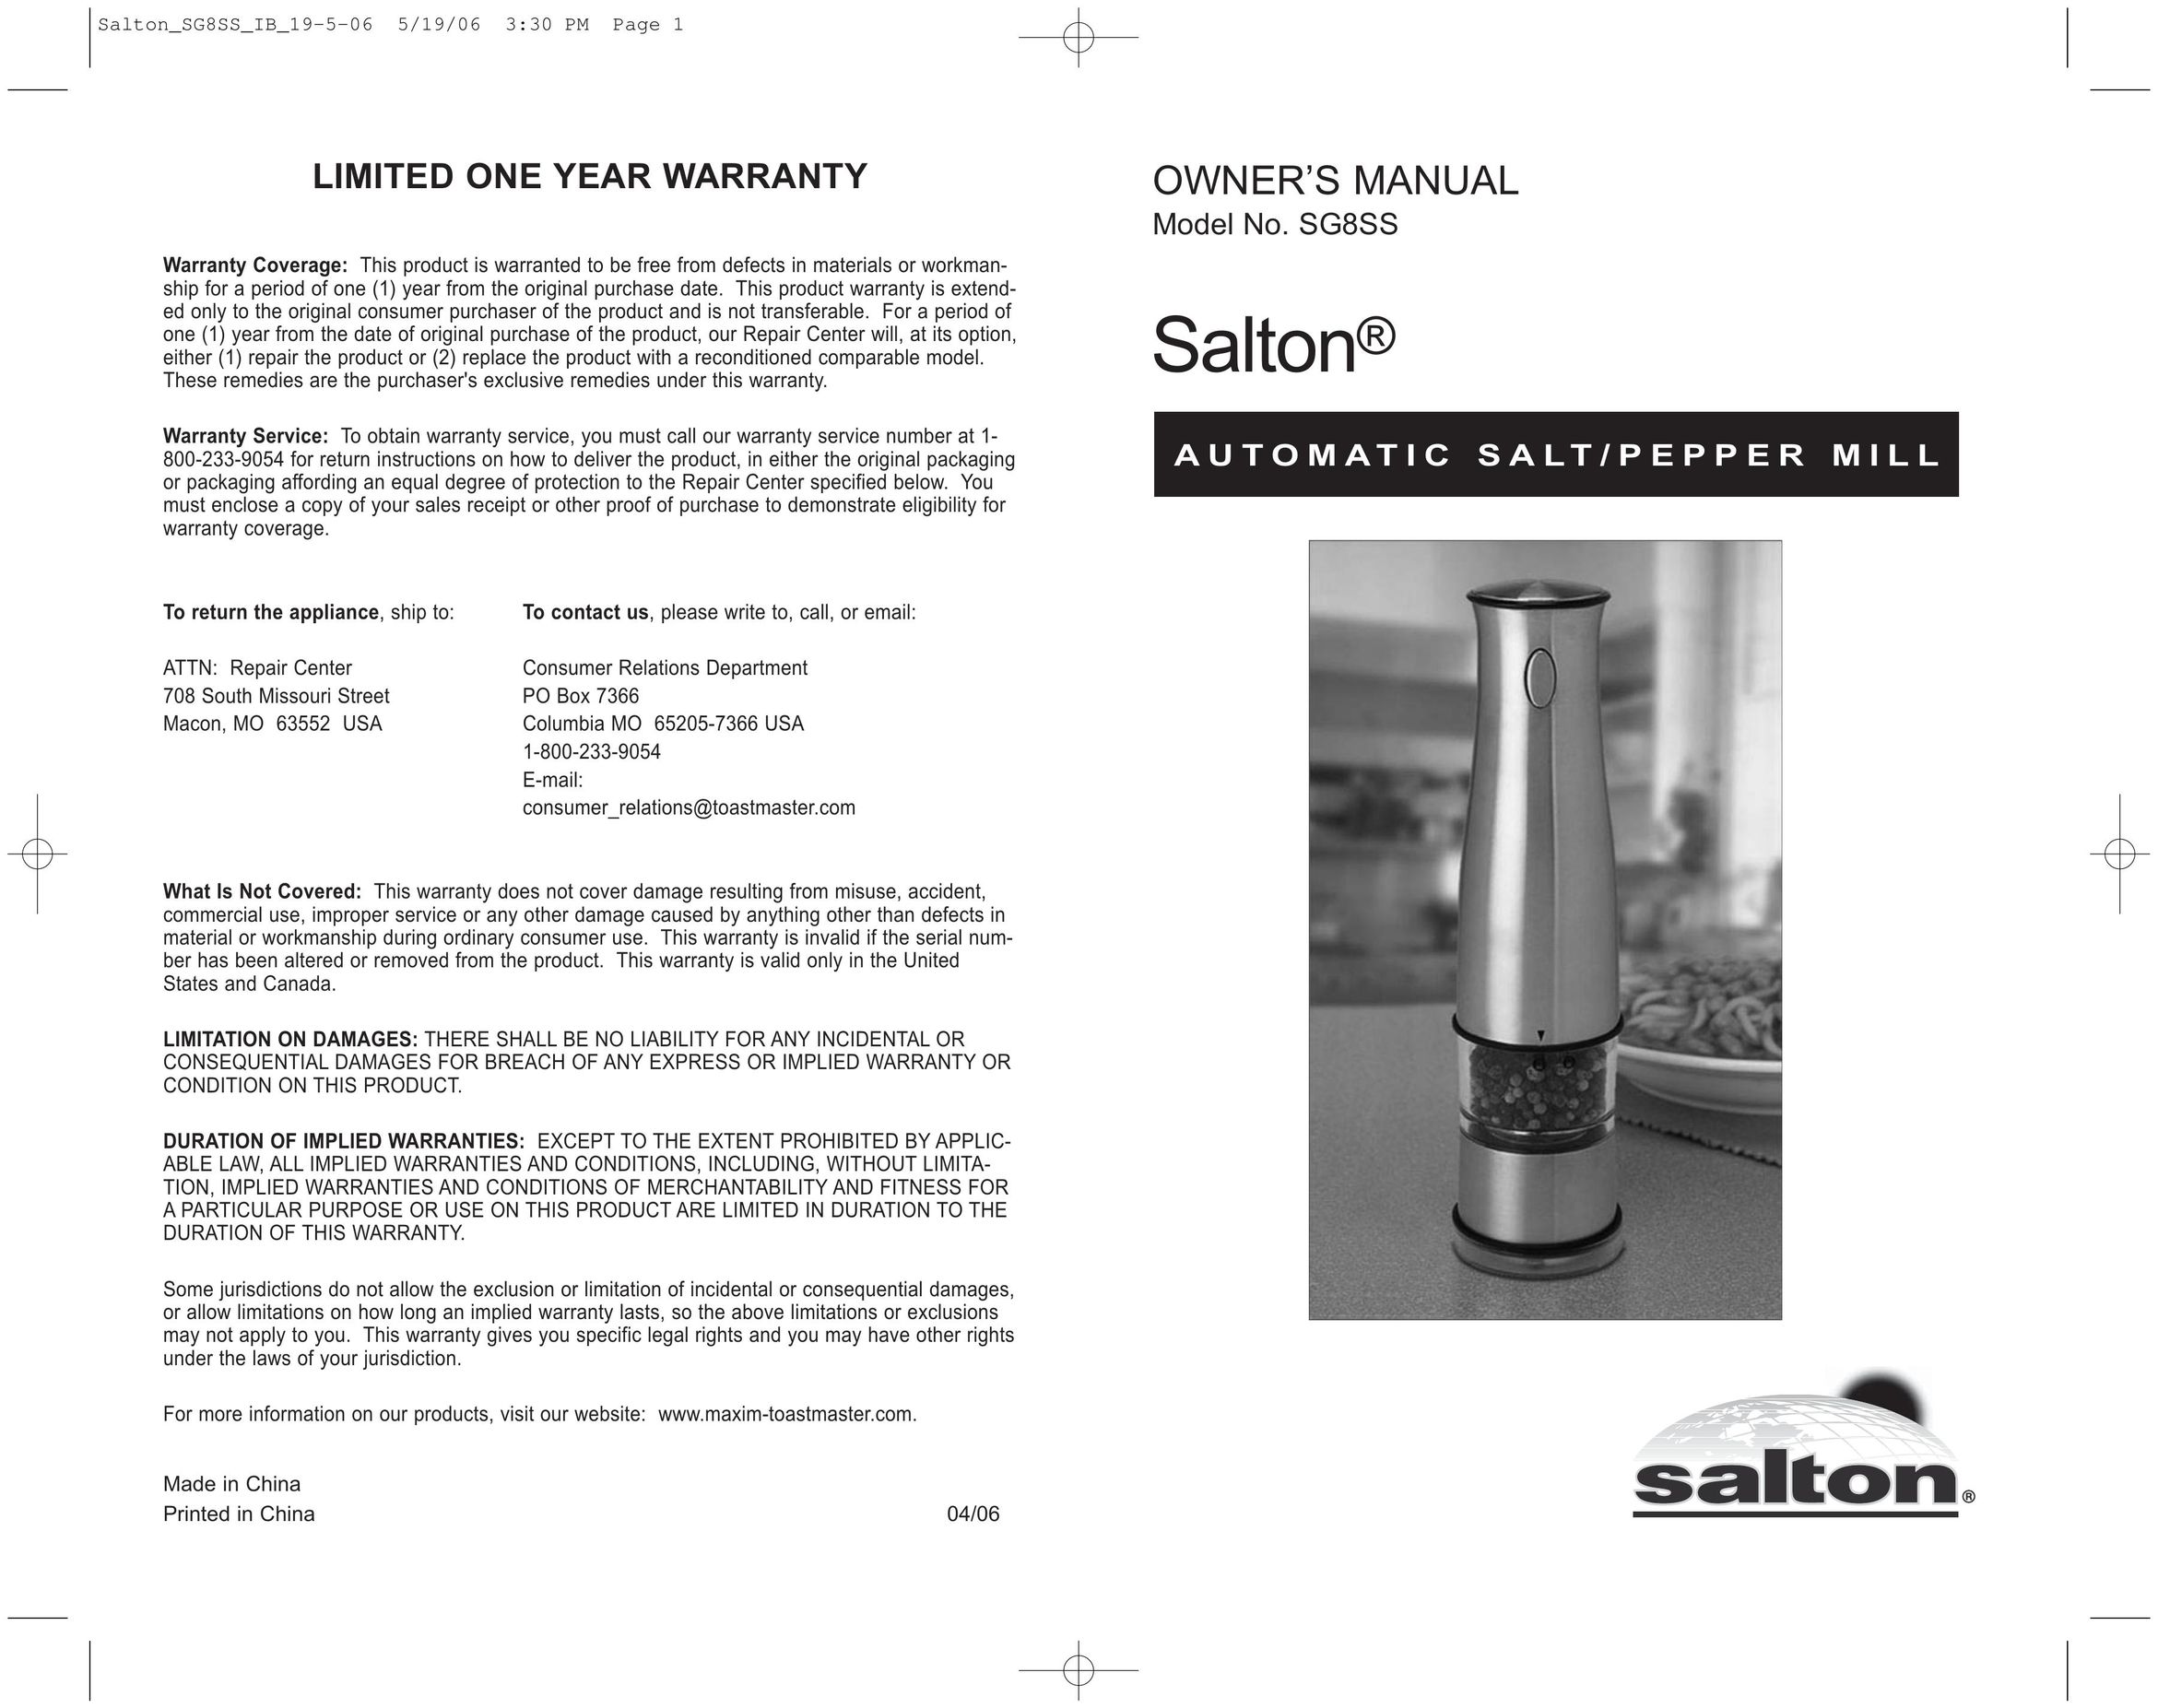 Salton SG8SS Coffee Grinder User Manual